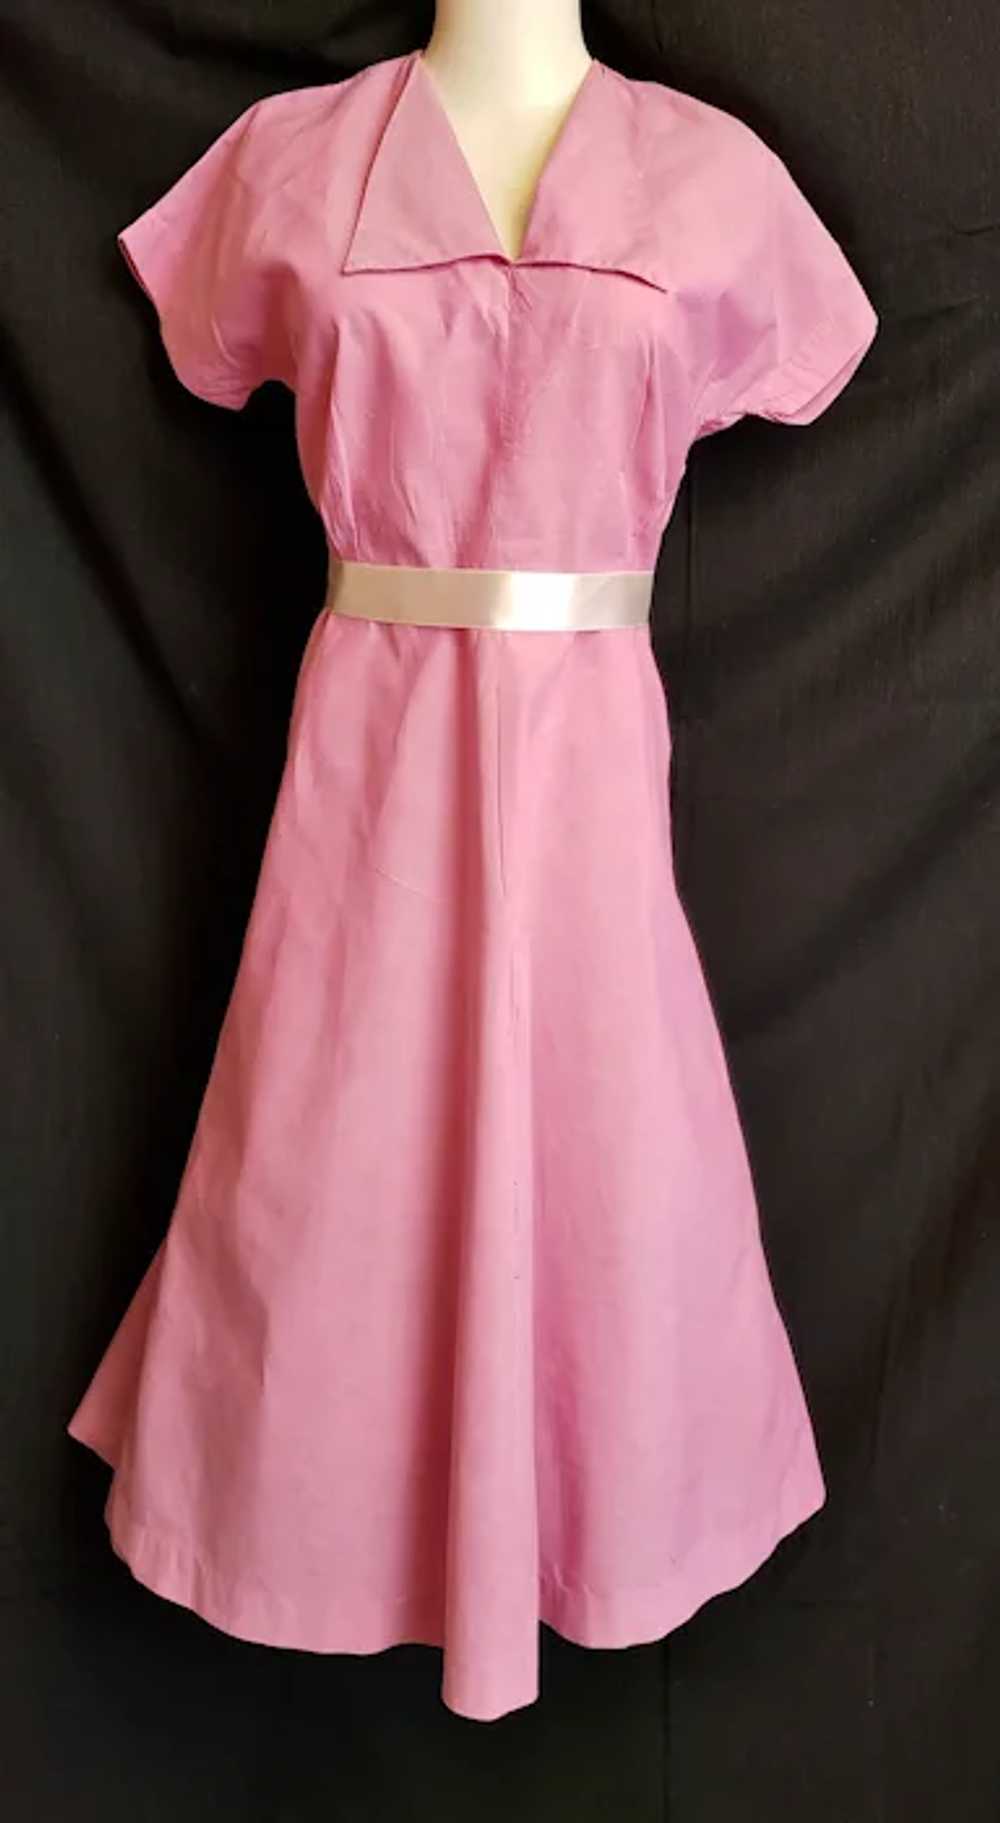 Luscious Raspberry Pink DAY DRESS - image 4